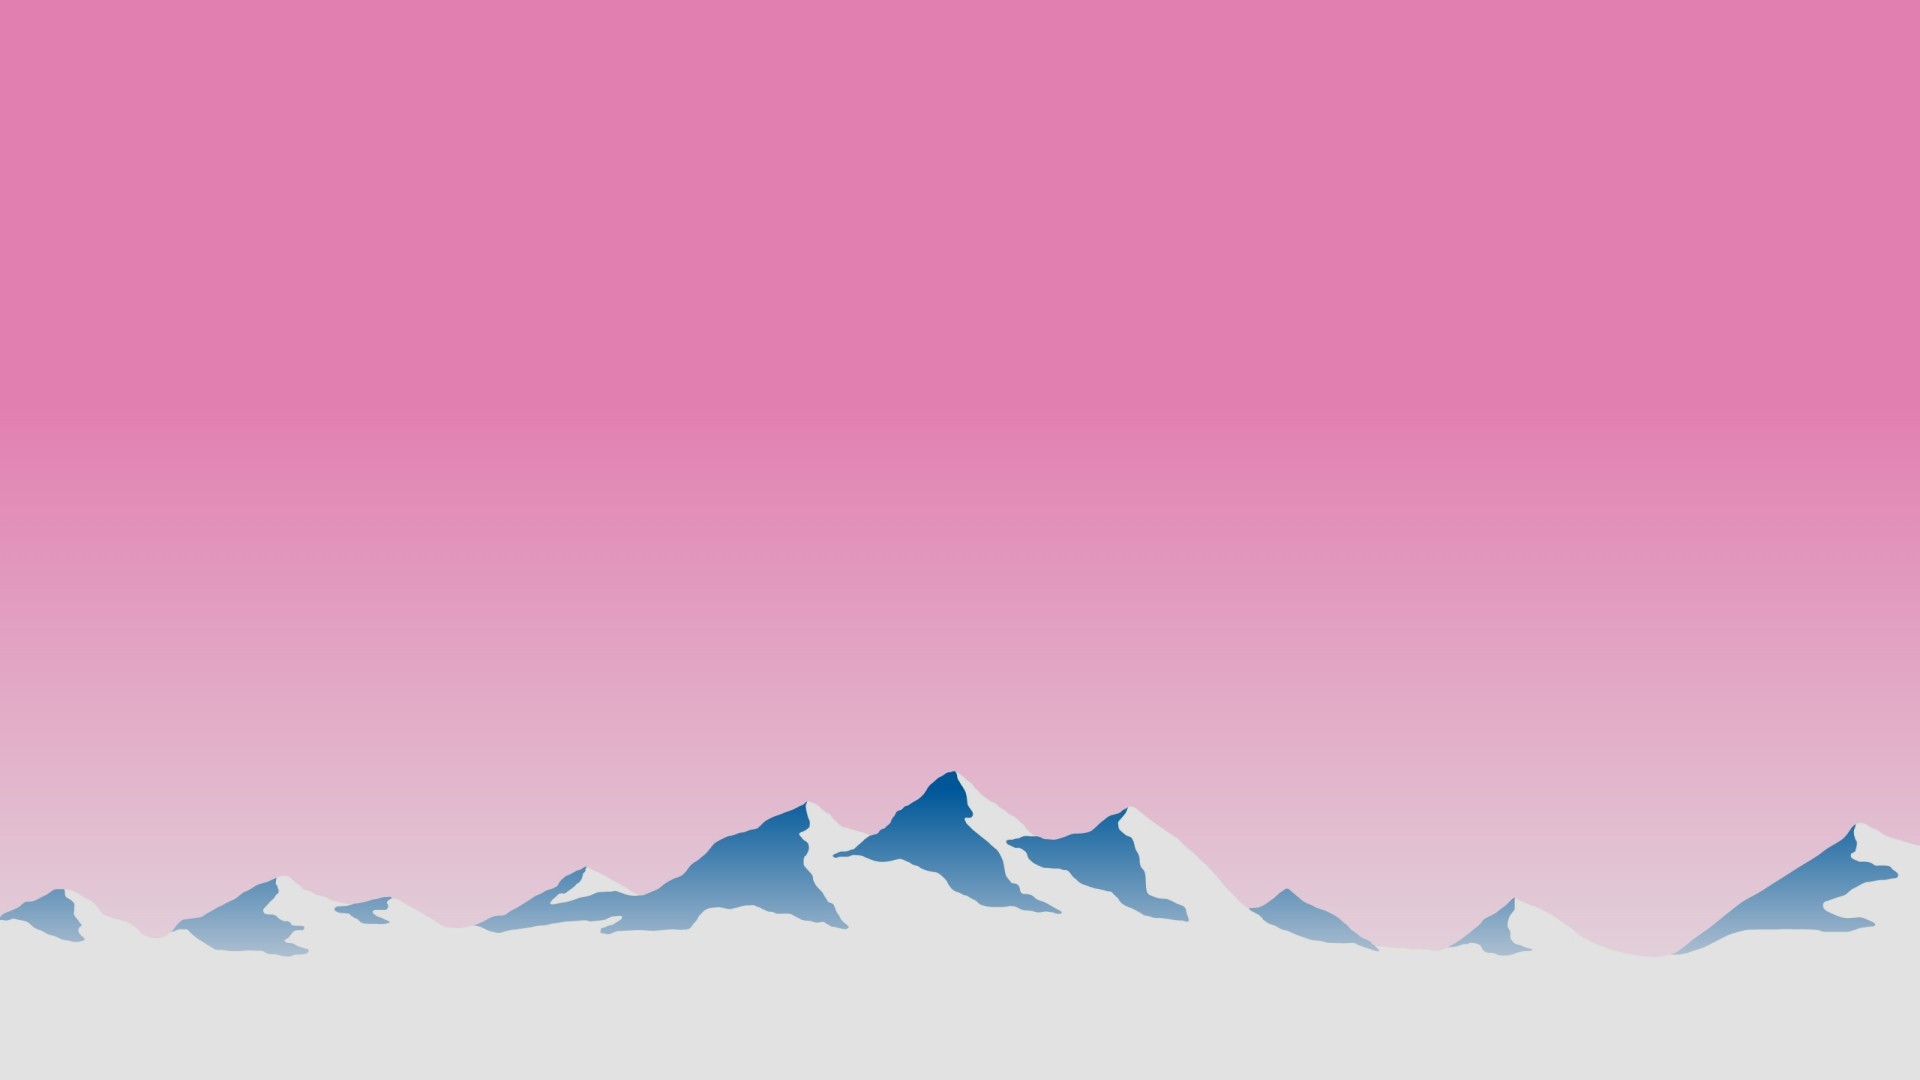 General 1920x1080 minimalism nature pink background landscape mountains sky